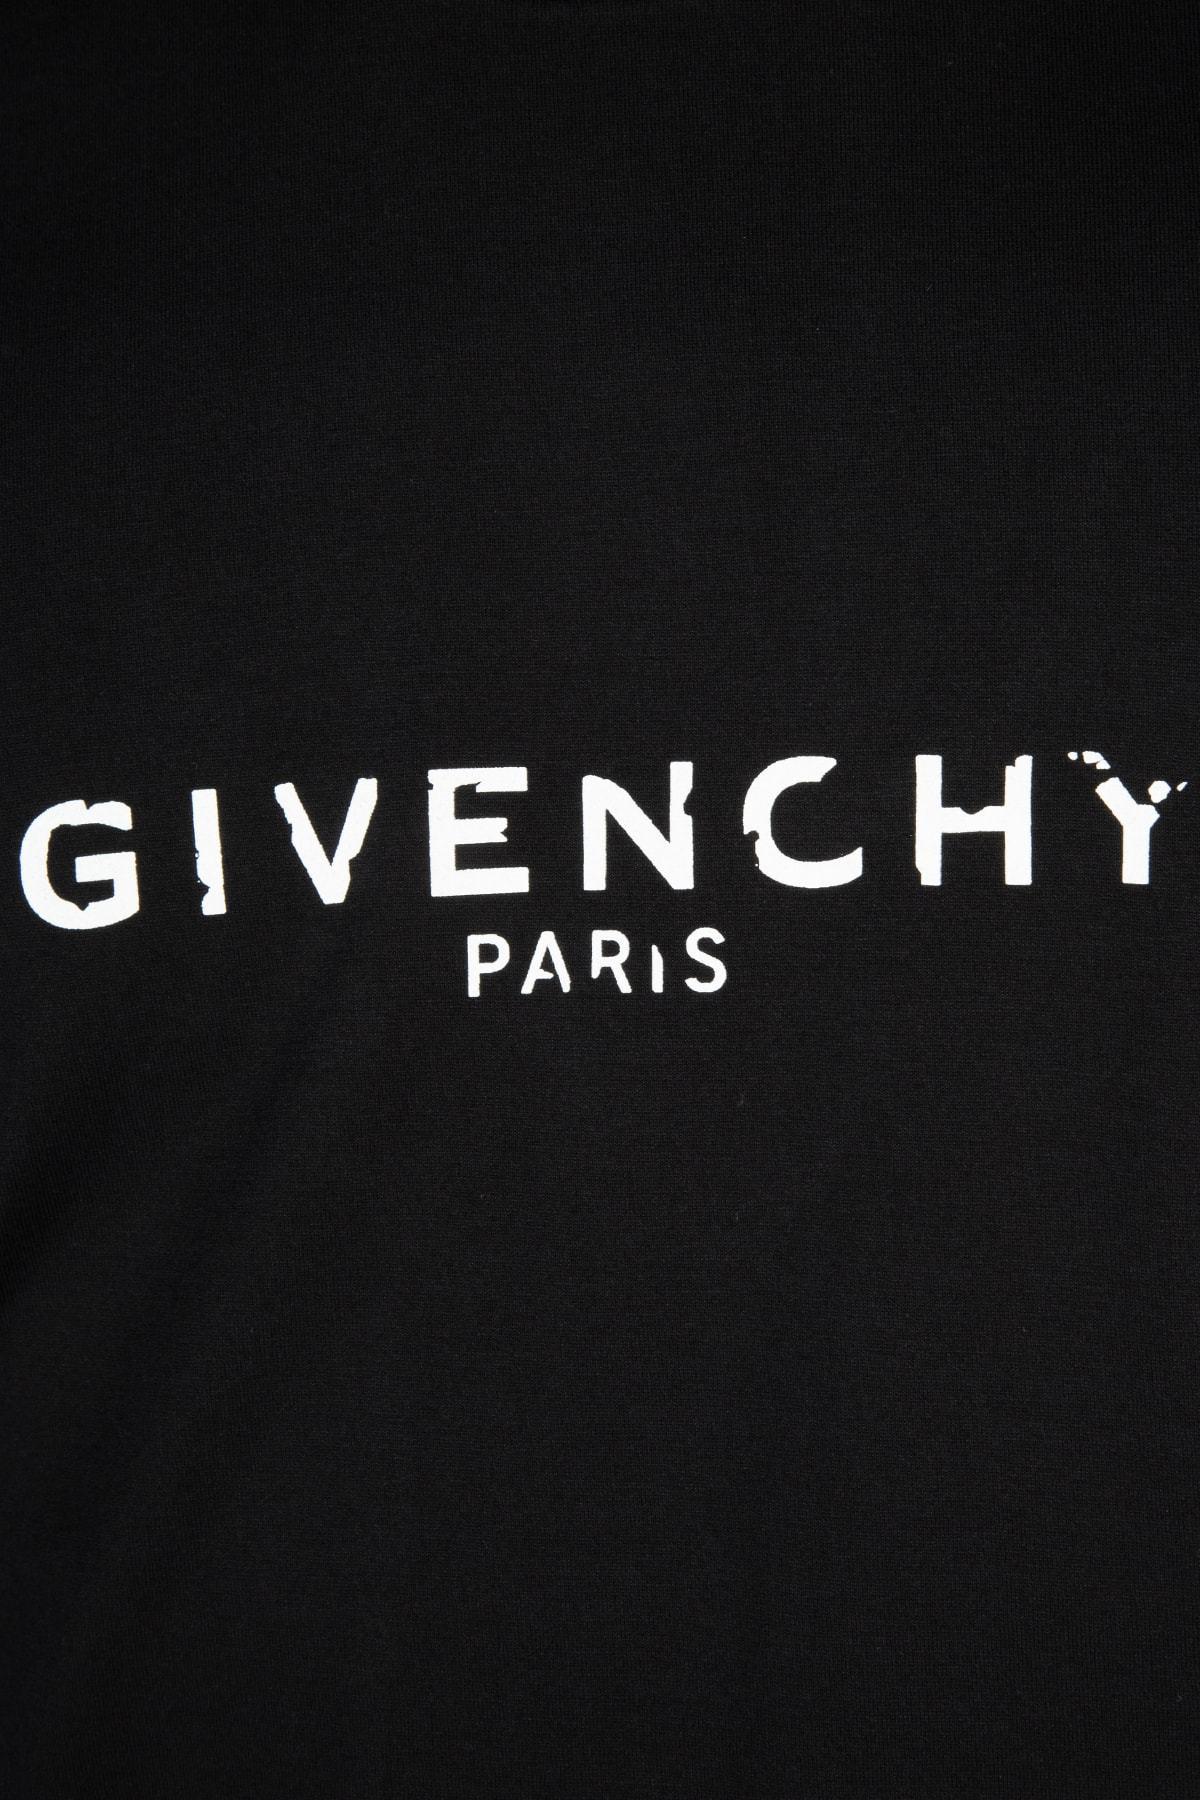 Givenchy Cotton Logo Crewneck T-shirt in Black for Men - Lyst